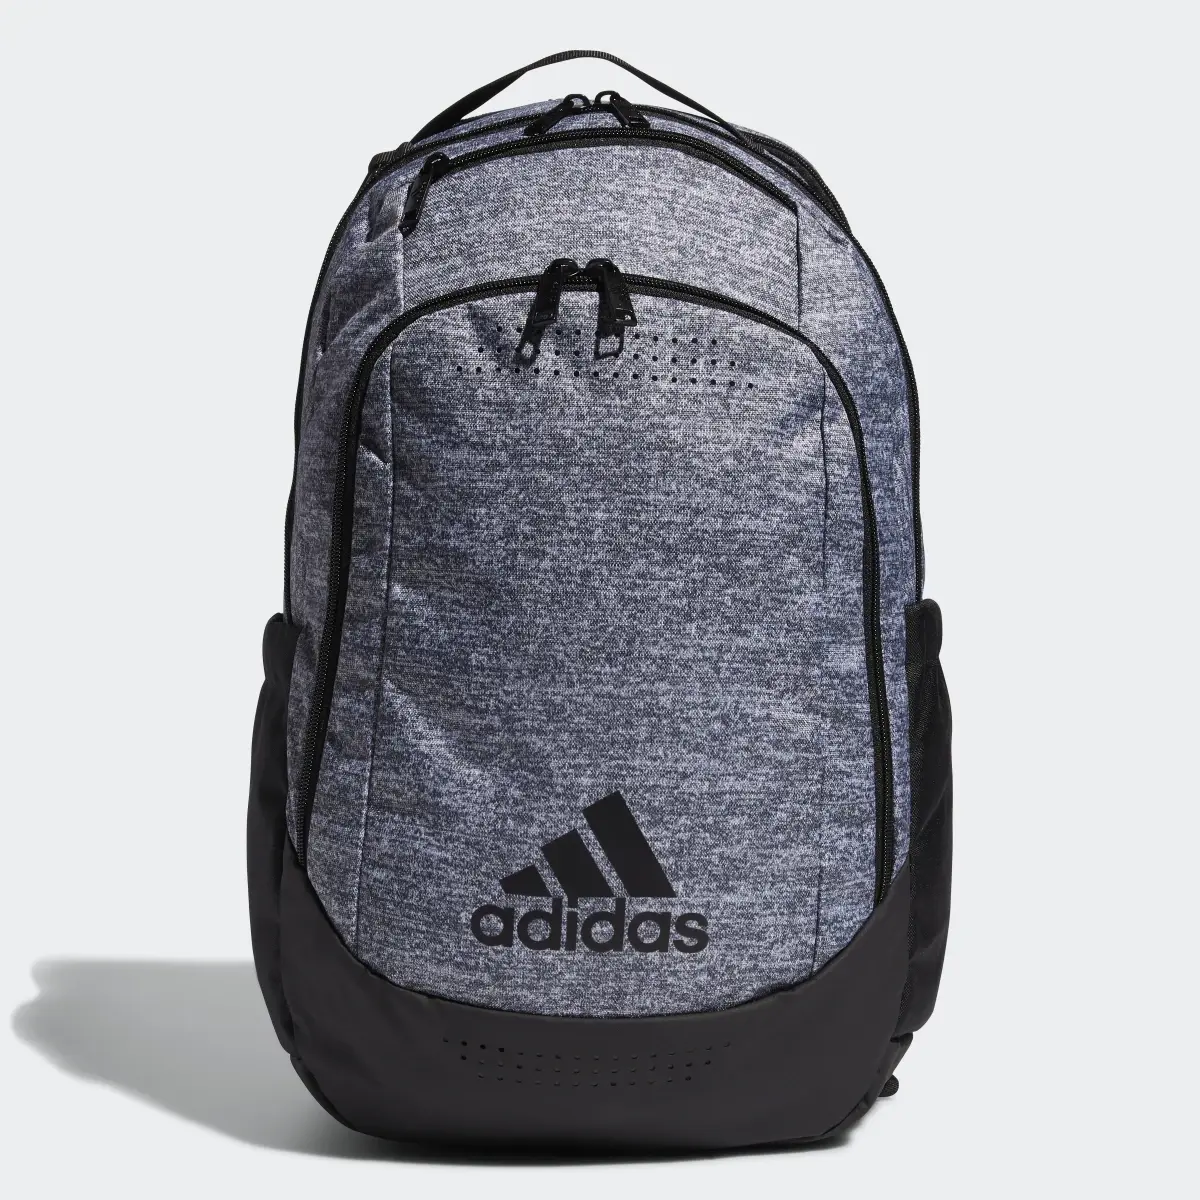 Adidas Defender Backpack. 2